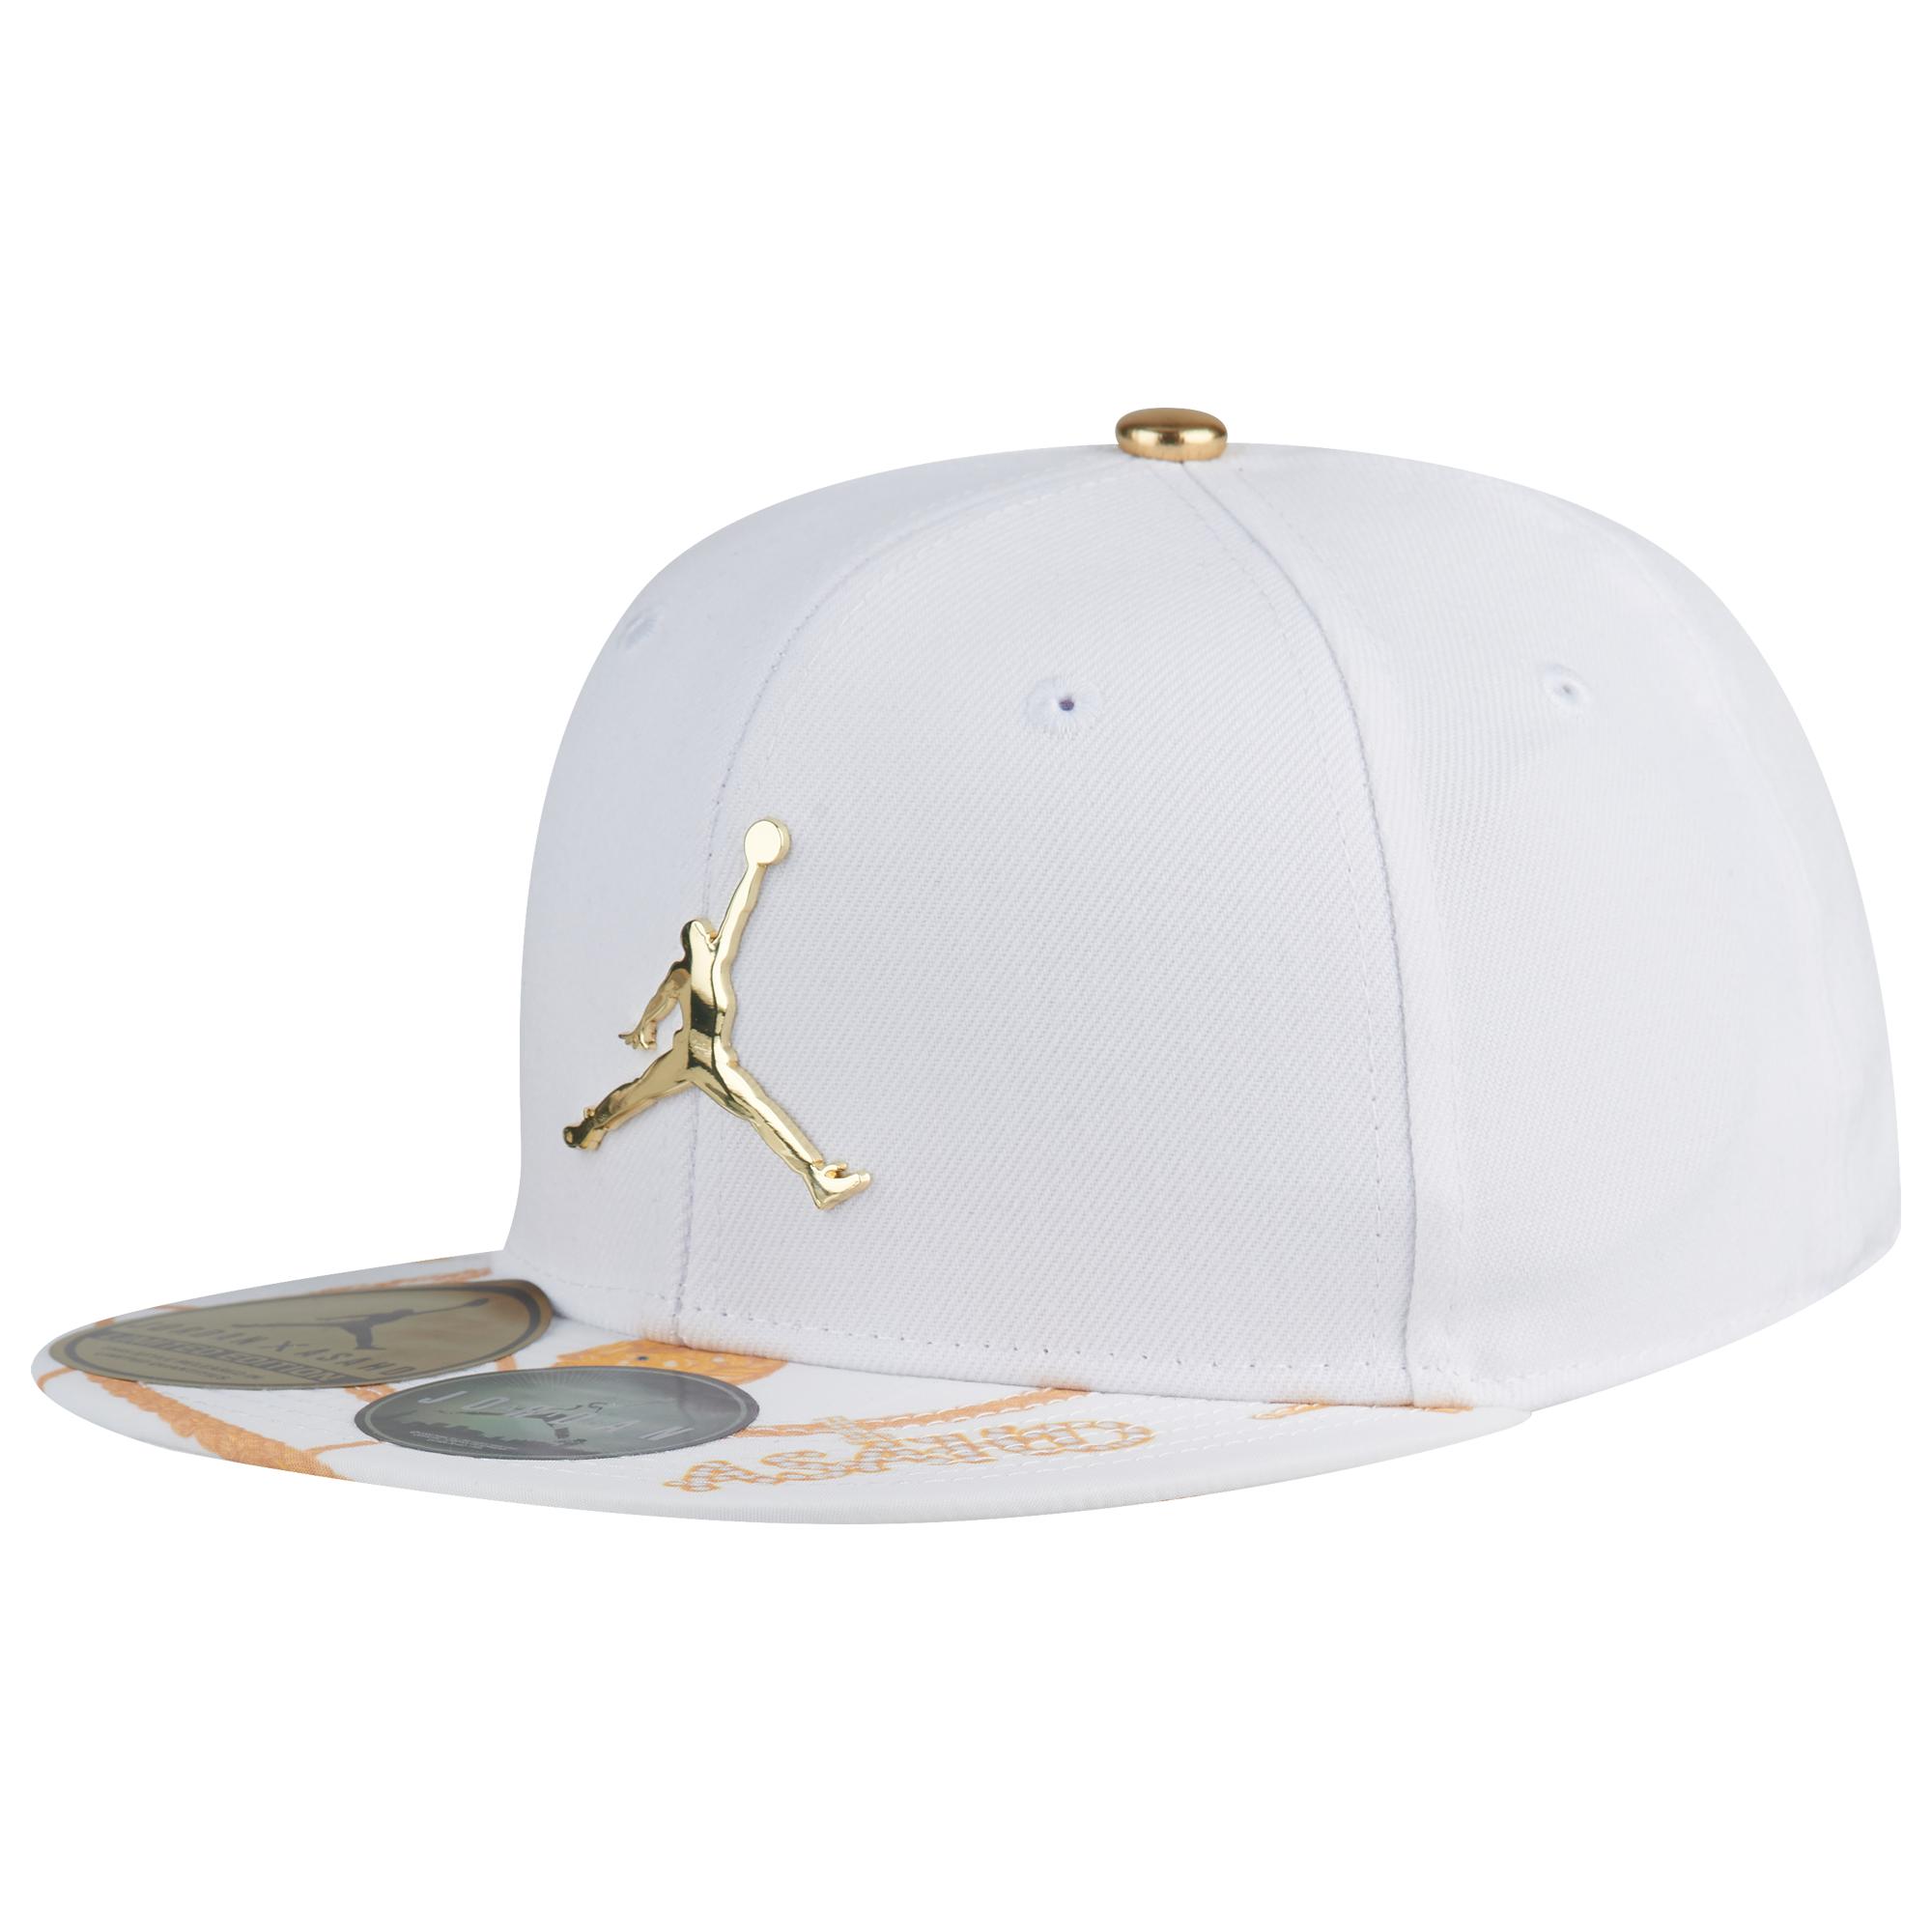 Nike Asahd X Jumpman Snapback Cap in Gold/White (White) for Men - Lyst